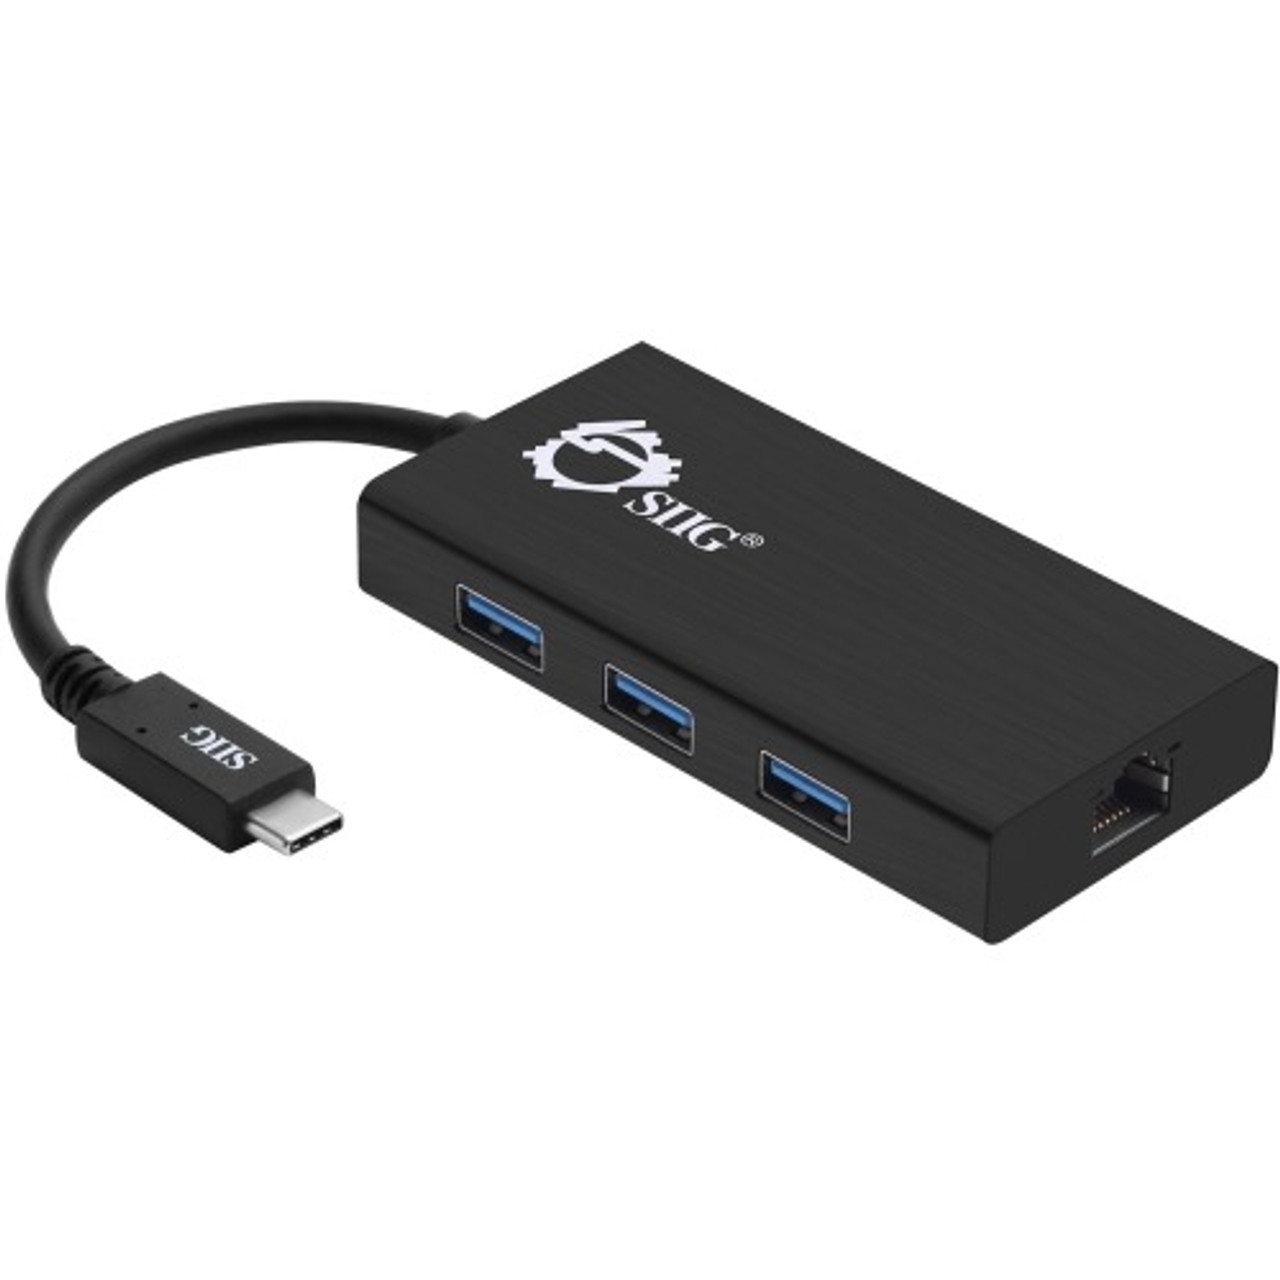 JU-H30D11-S1 SIIG USB-C to USB 3.0 Hub & Gigabit Ethernet LAN Adapter USB Type C External 3 USB Port(s) 1 Network (RJ-45) Port(s) 3 USB 3.0 Port(s) PC, Mac